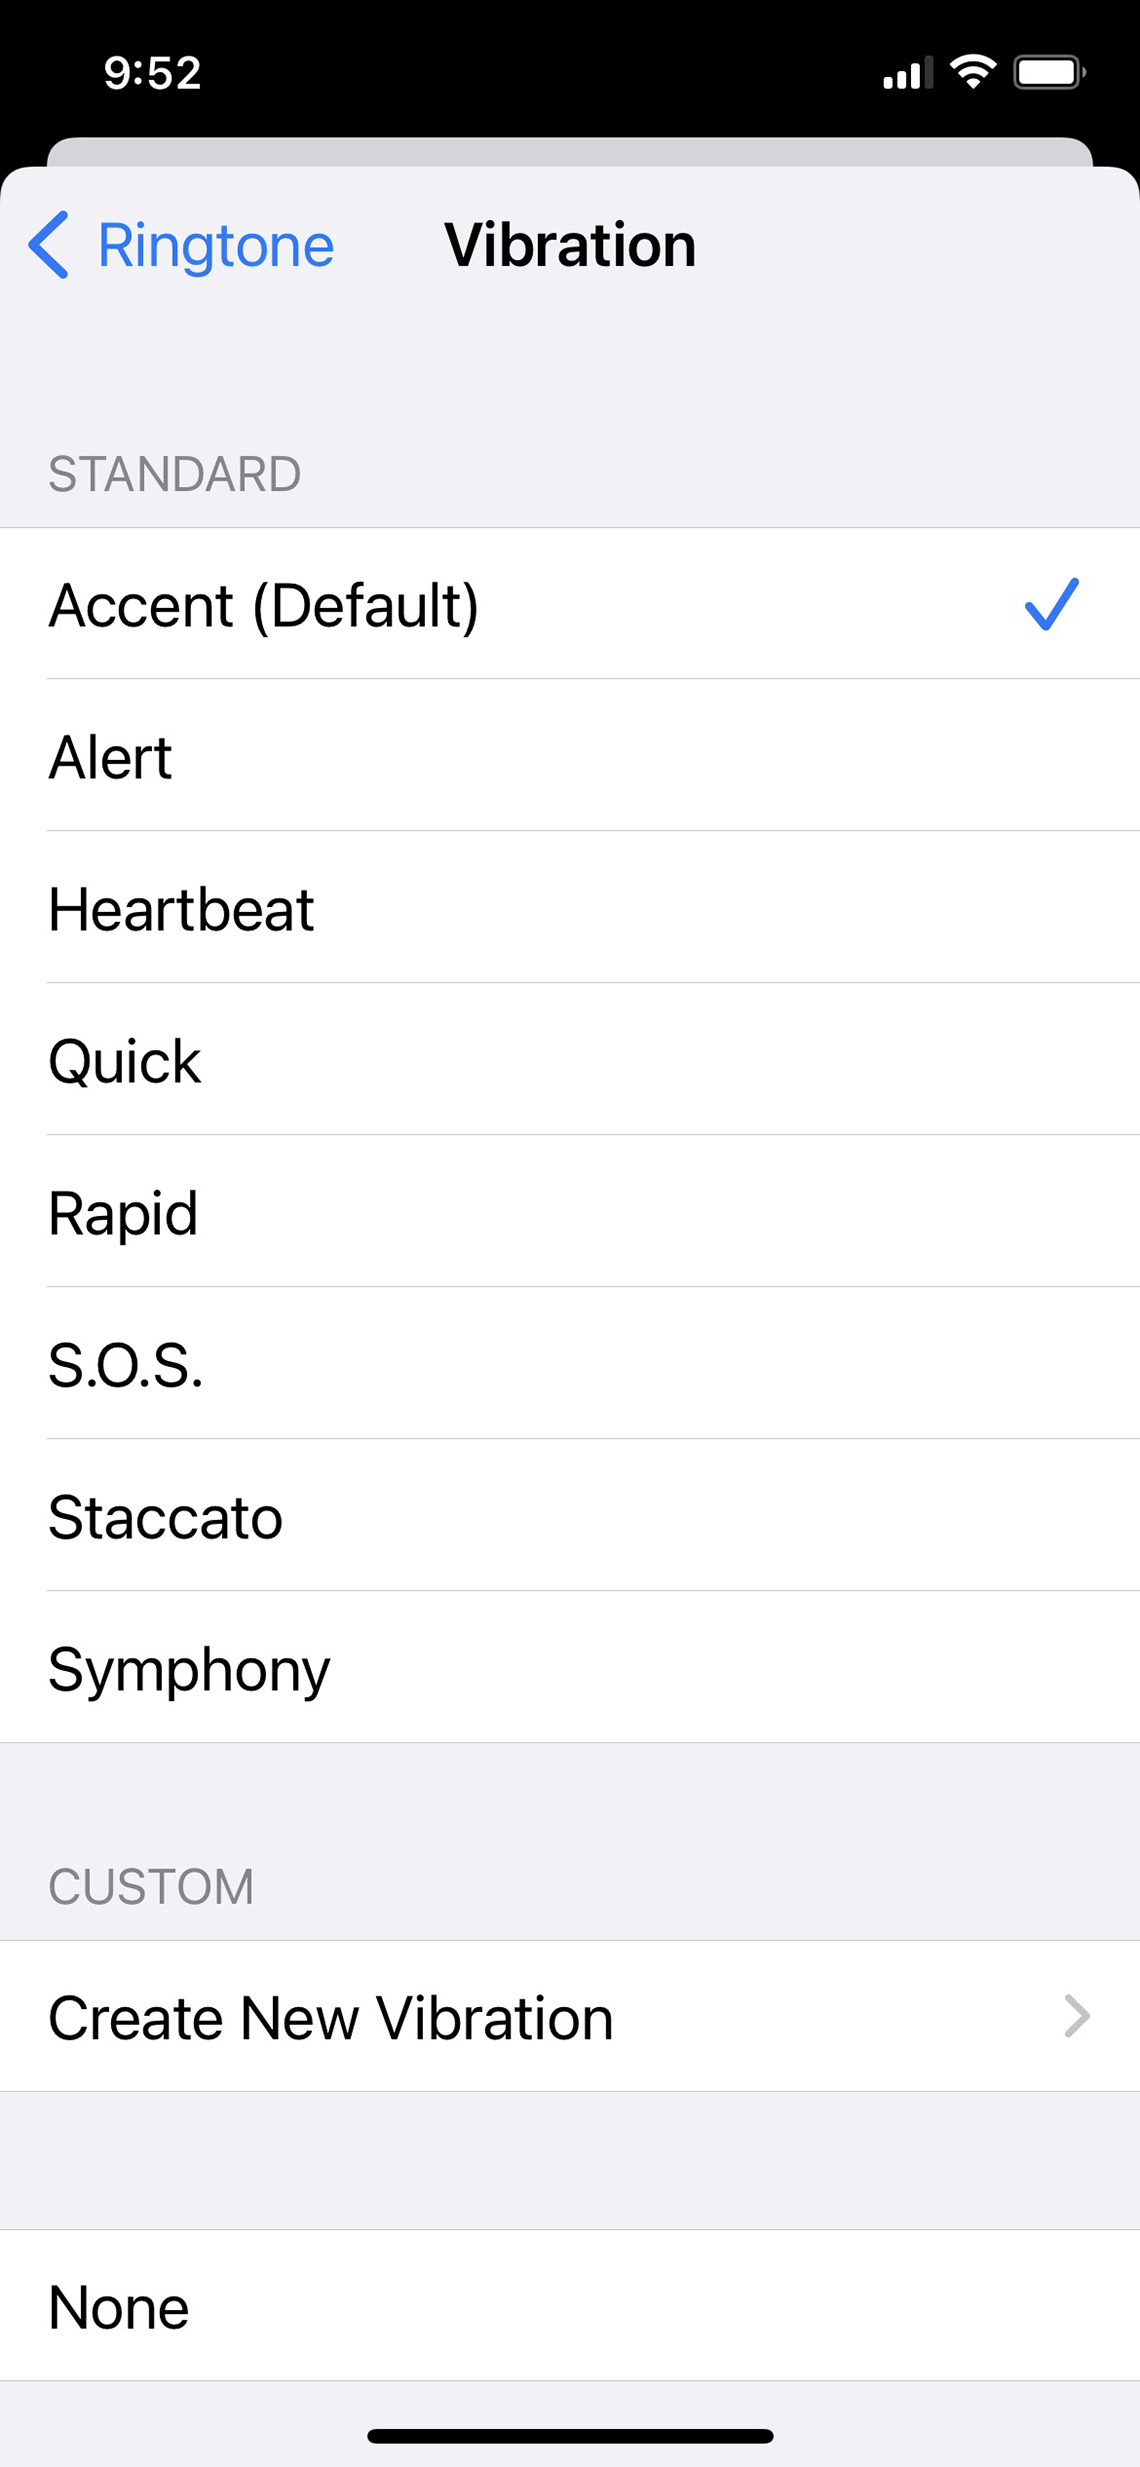 a screenshot of editing the vibration ringtone settings on iphone